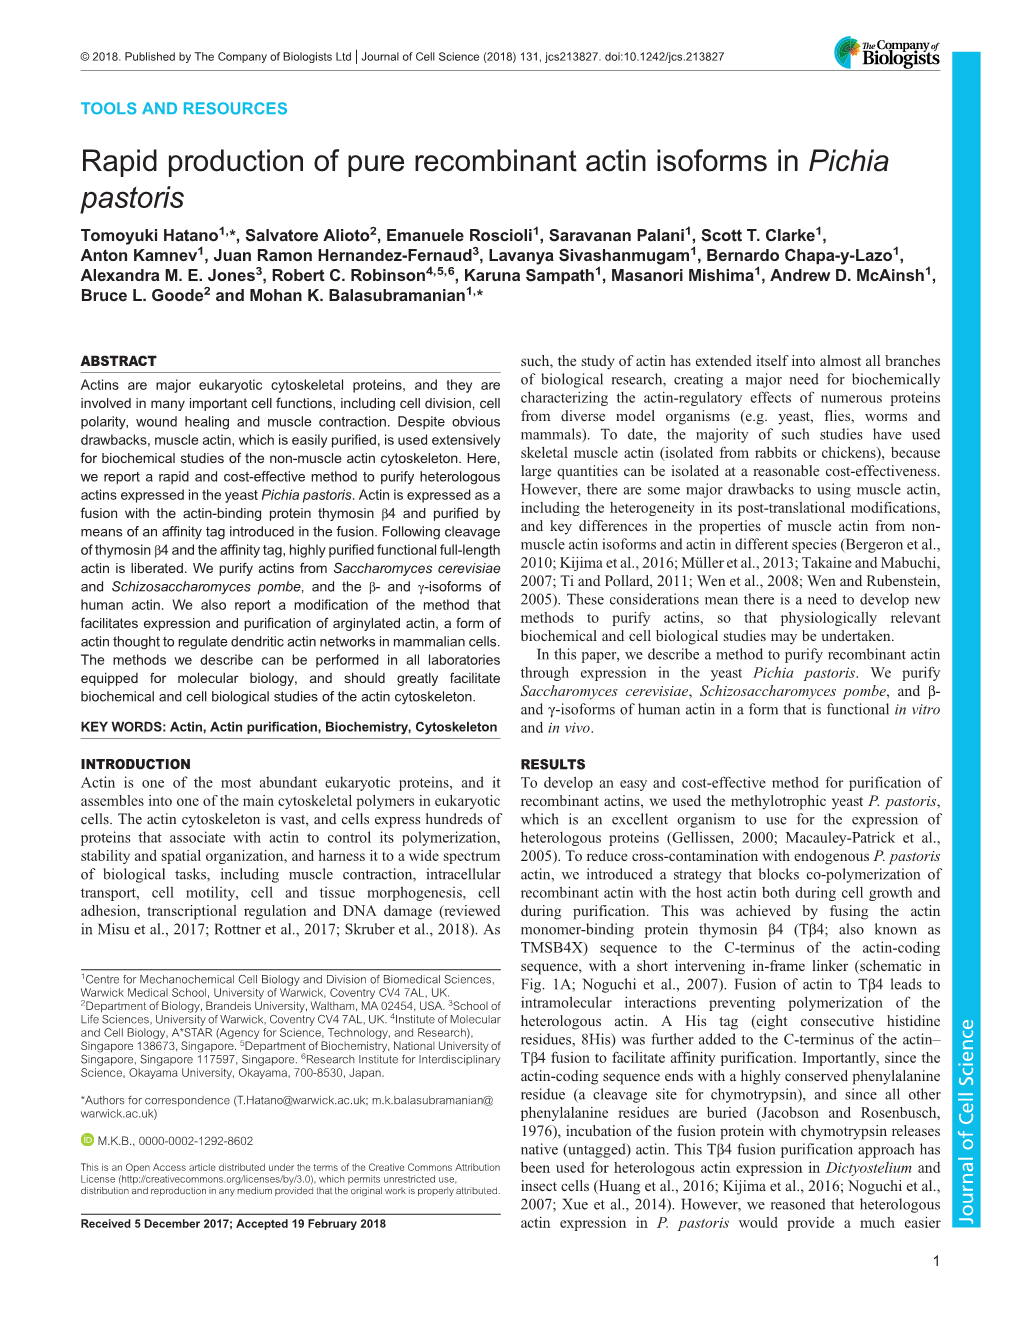 Rapid Production of Pure Recombinant Actin Isoforms in Pichia Pastoris